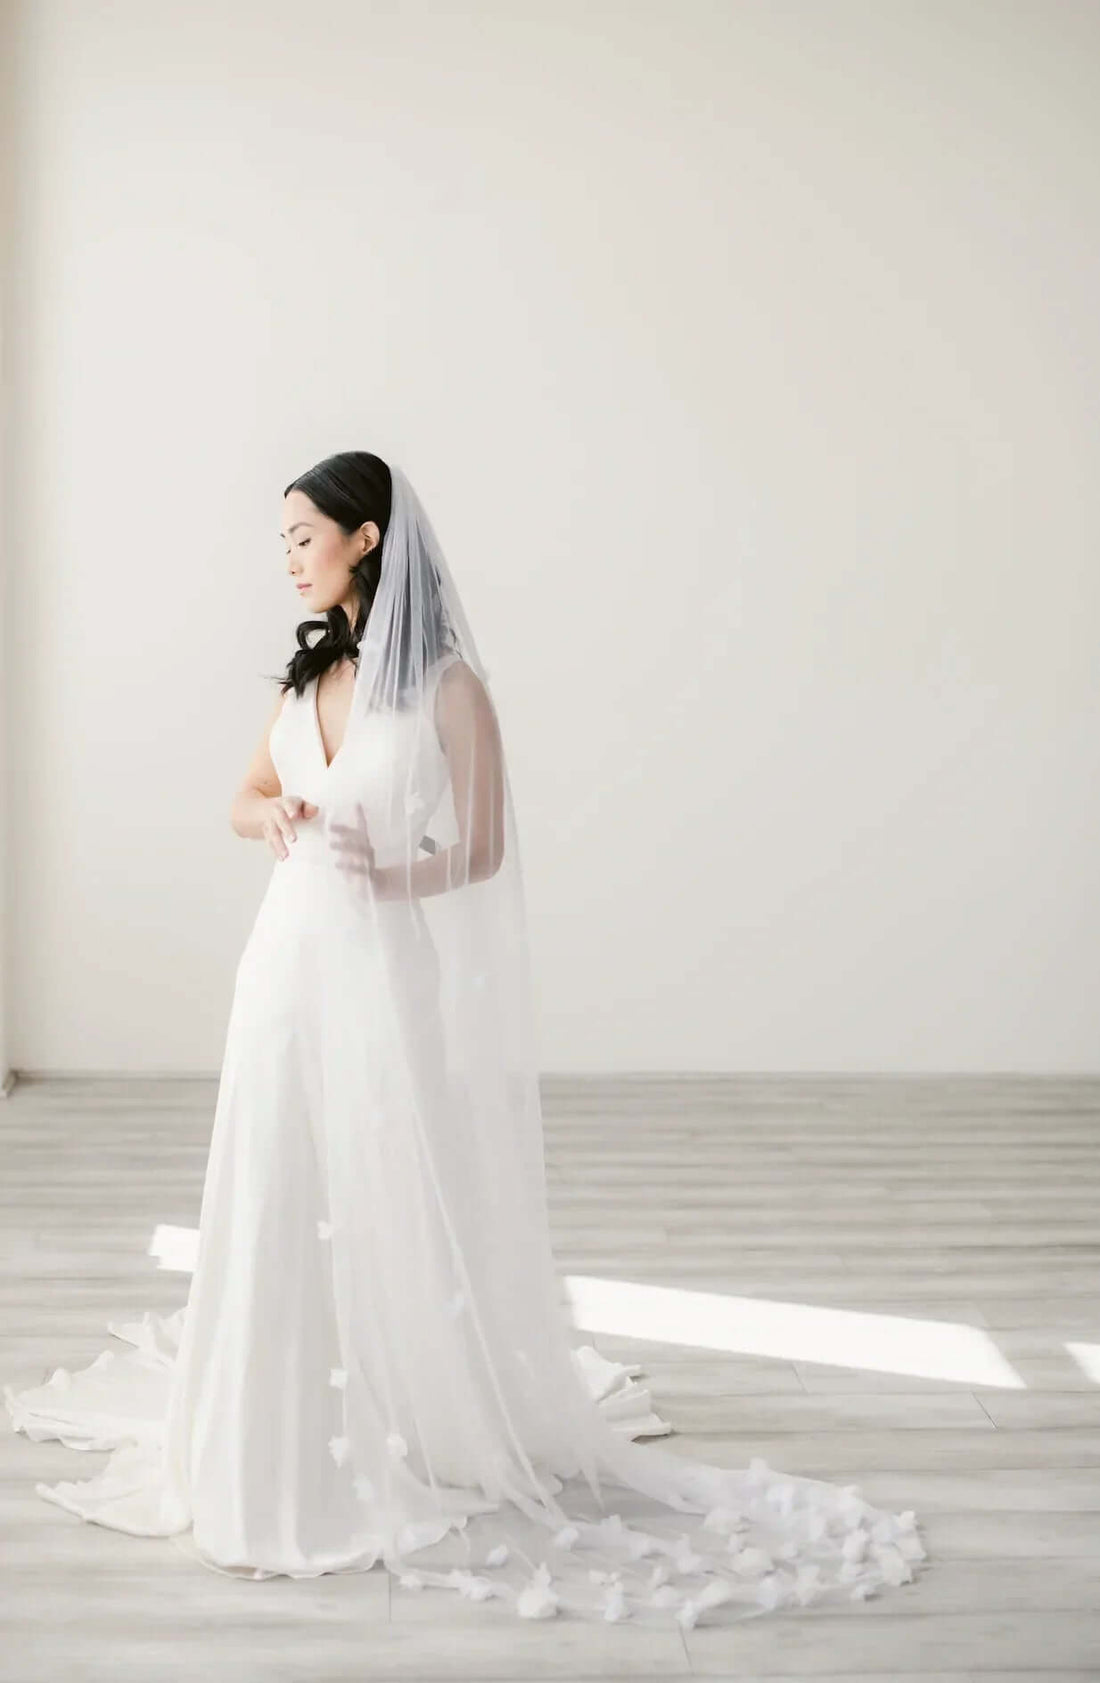 Featured product: Chiffon floral Italian tulle bridal veil Tessa Kim